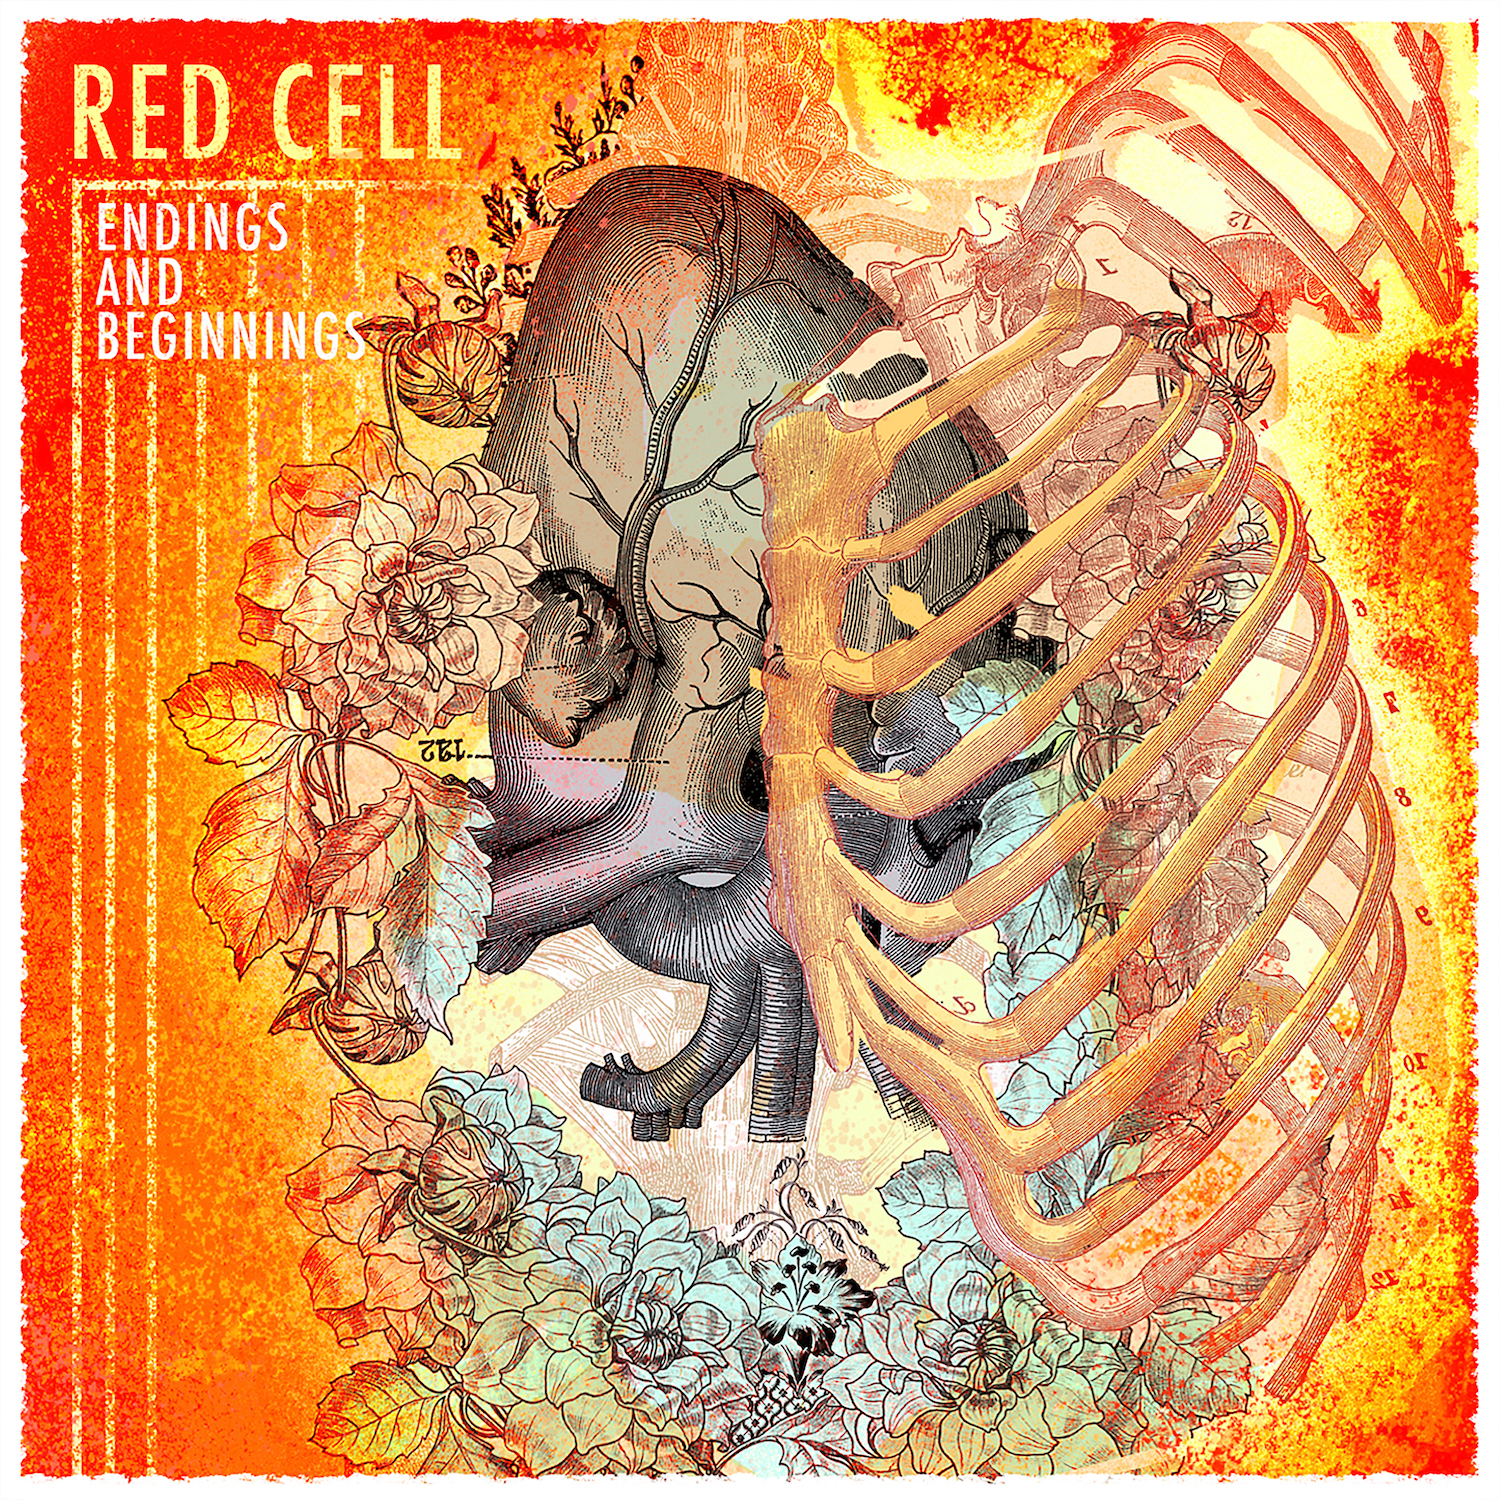 RedCell_Endings-and-Beginnings_album-cover-1500pxjpg